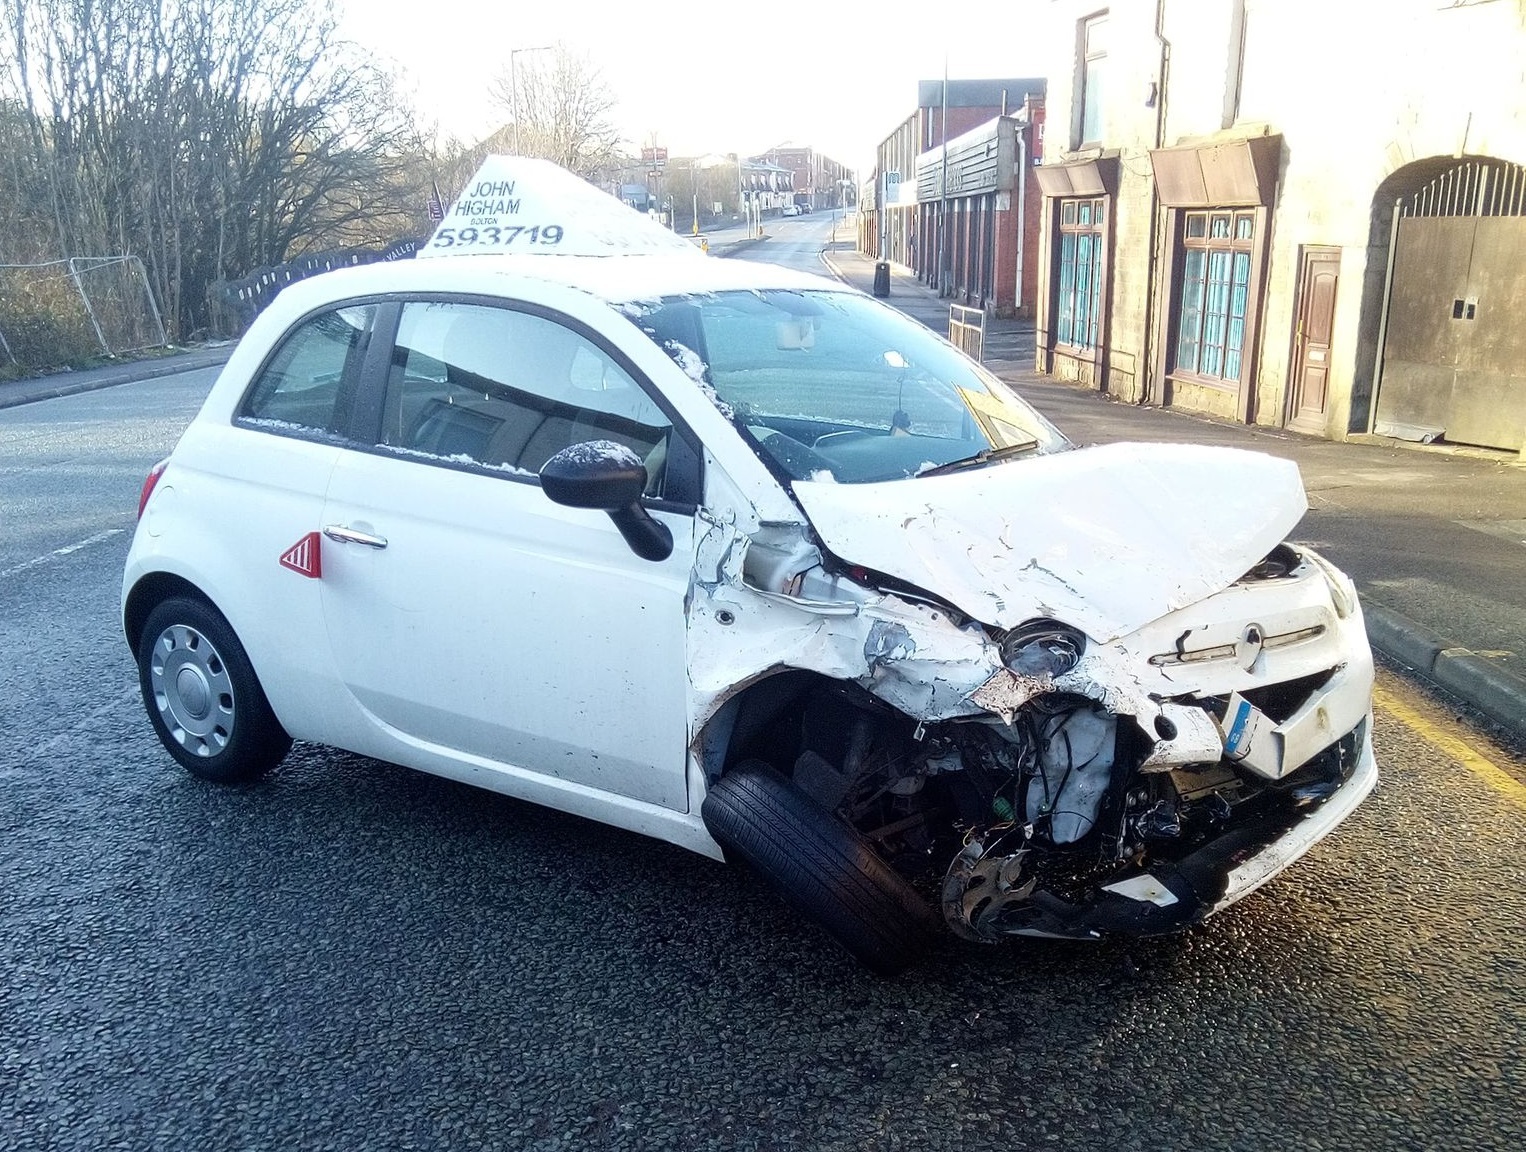 Mr Highams car after the crash on Blackburn Road in Astley Bridge